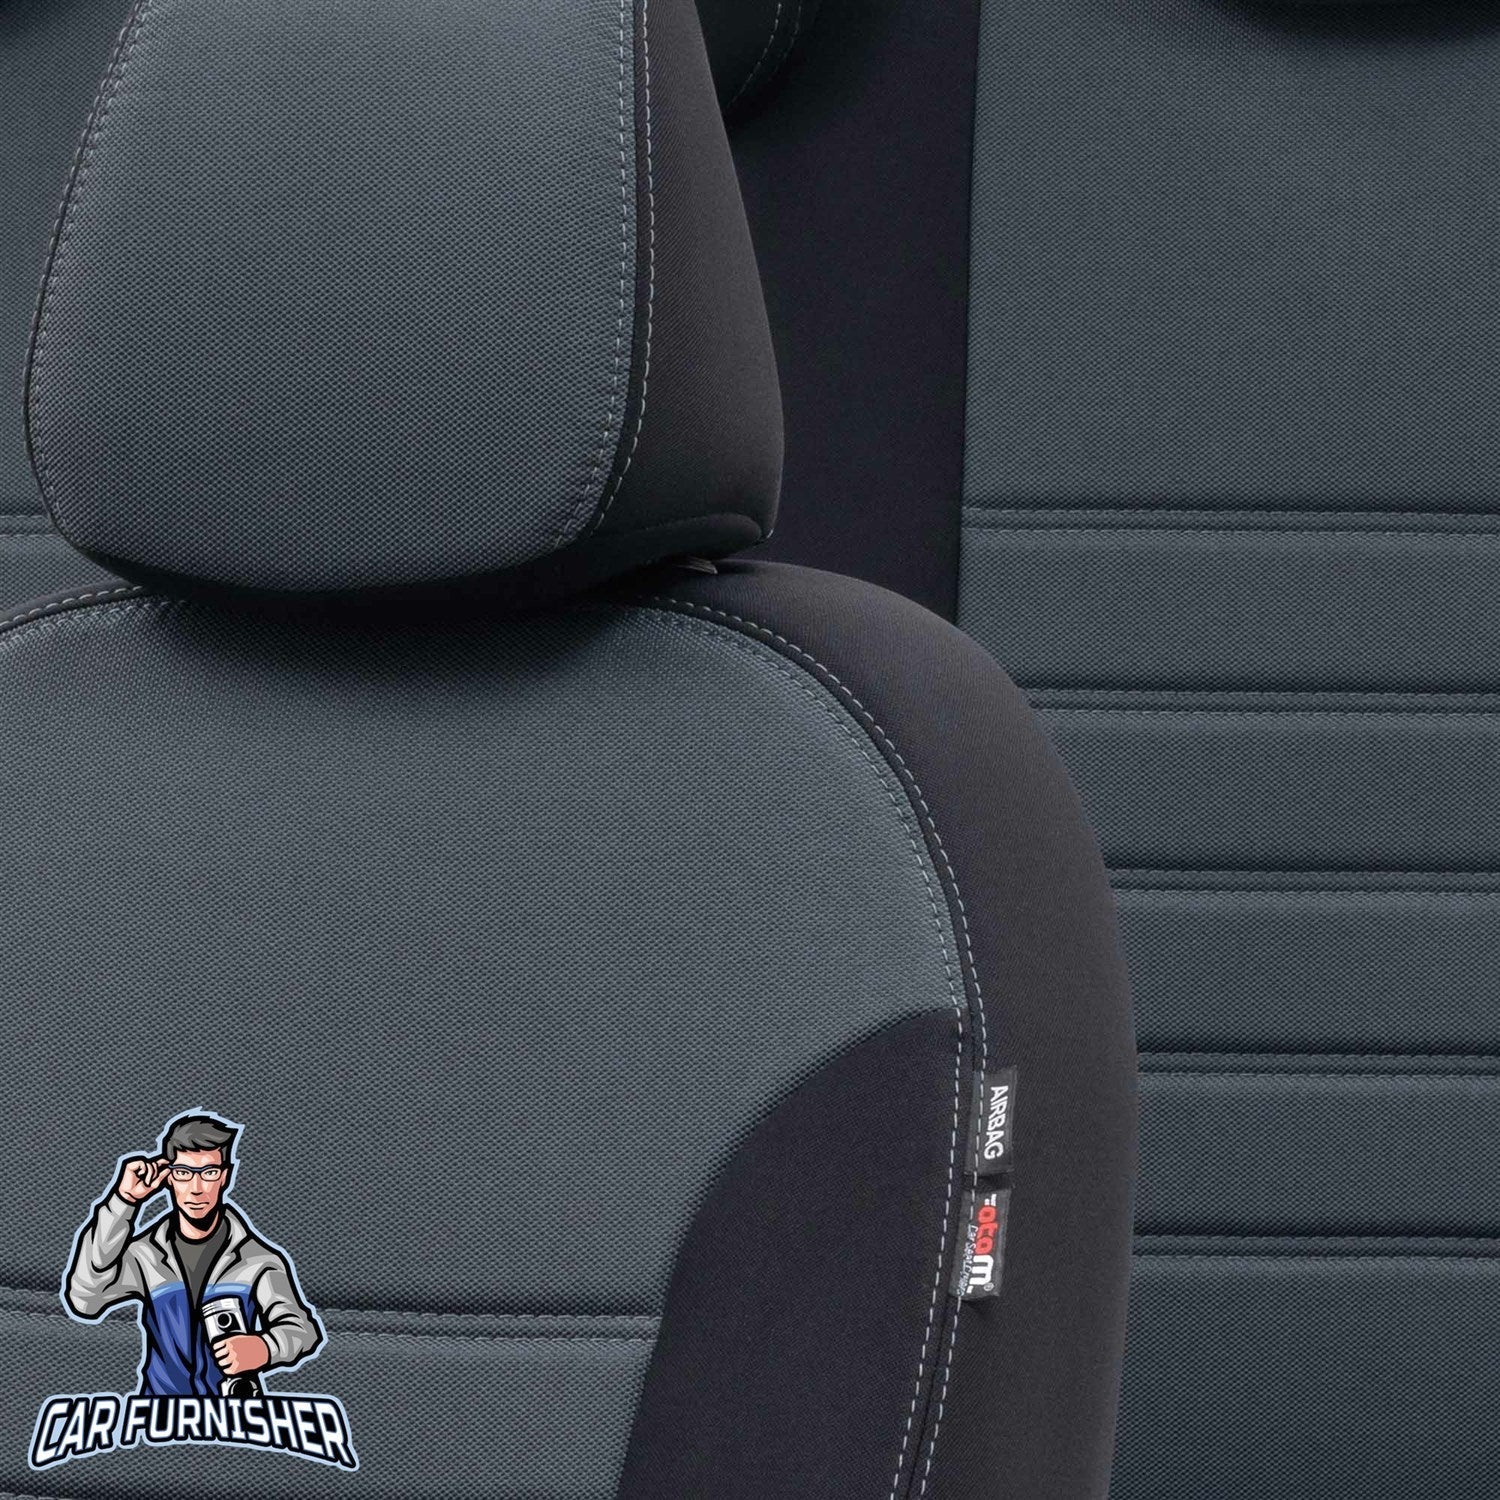 Seat Alhambra Seat Covers Original Jacquard Design Smoked Black Jacquard Fabric